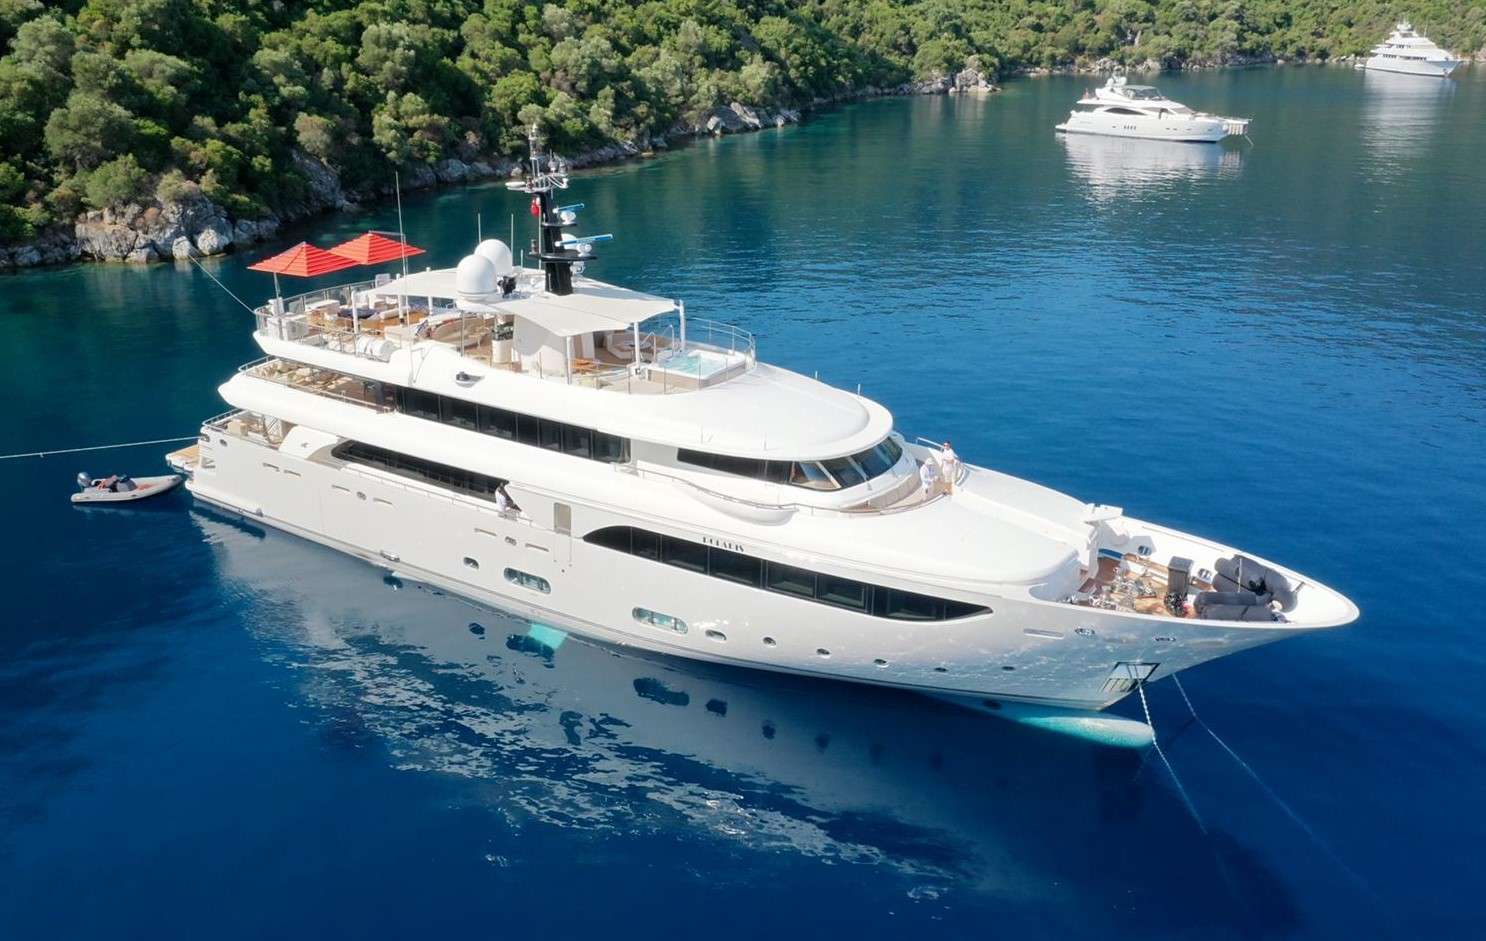 POLARIS - Superyacht charter Croatia & Boat hire in Croatia, Greece, Turkey 1